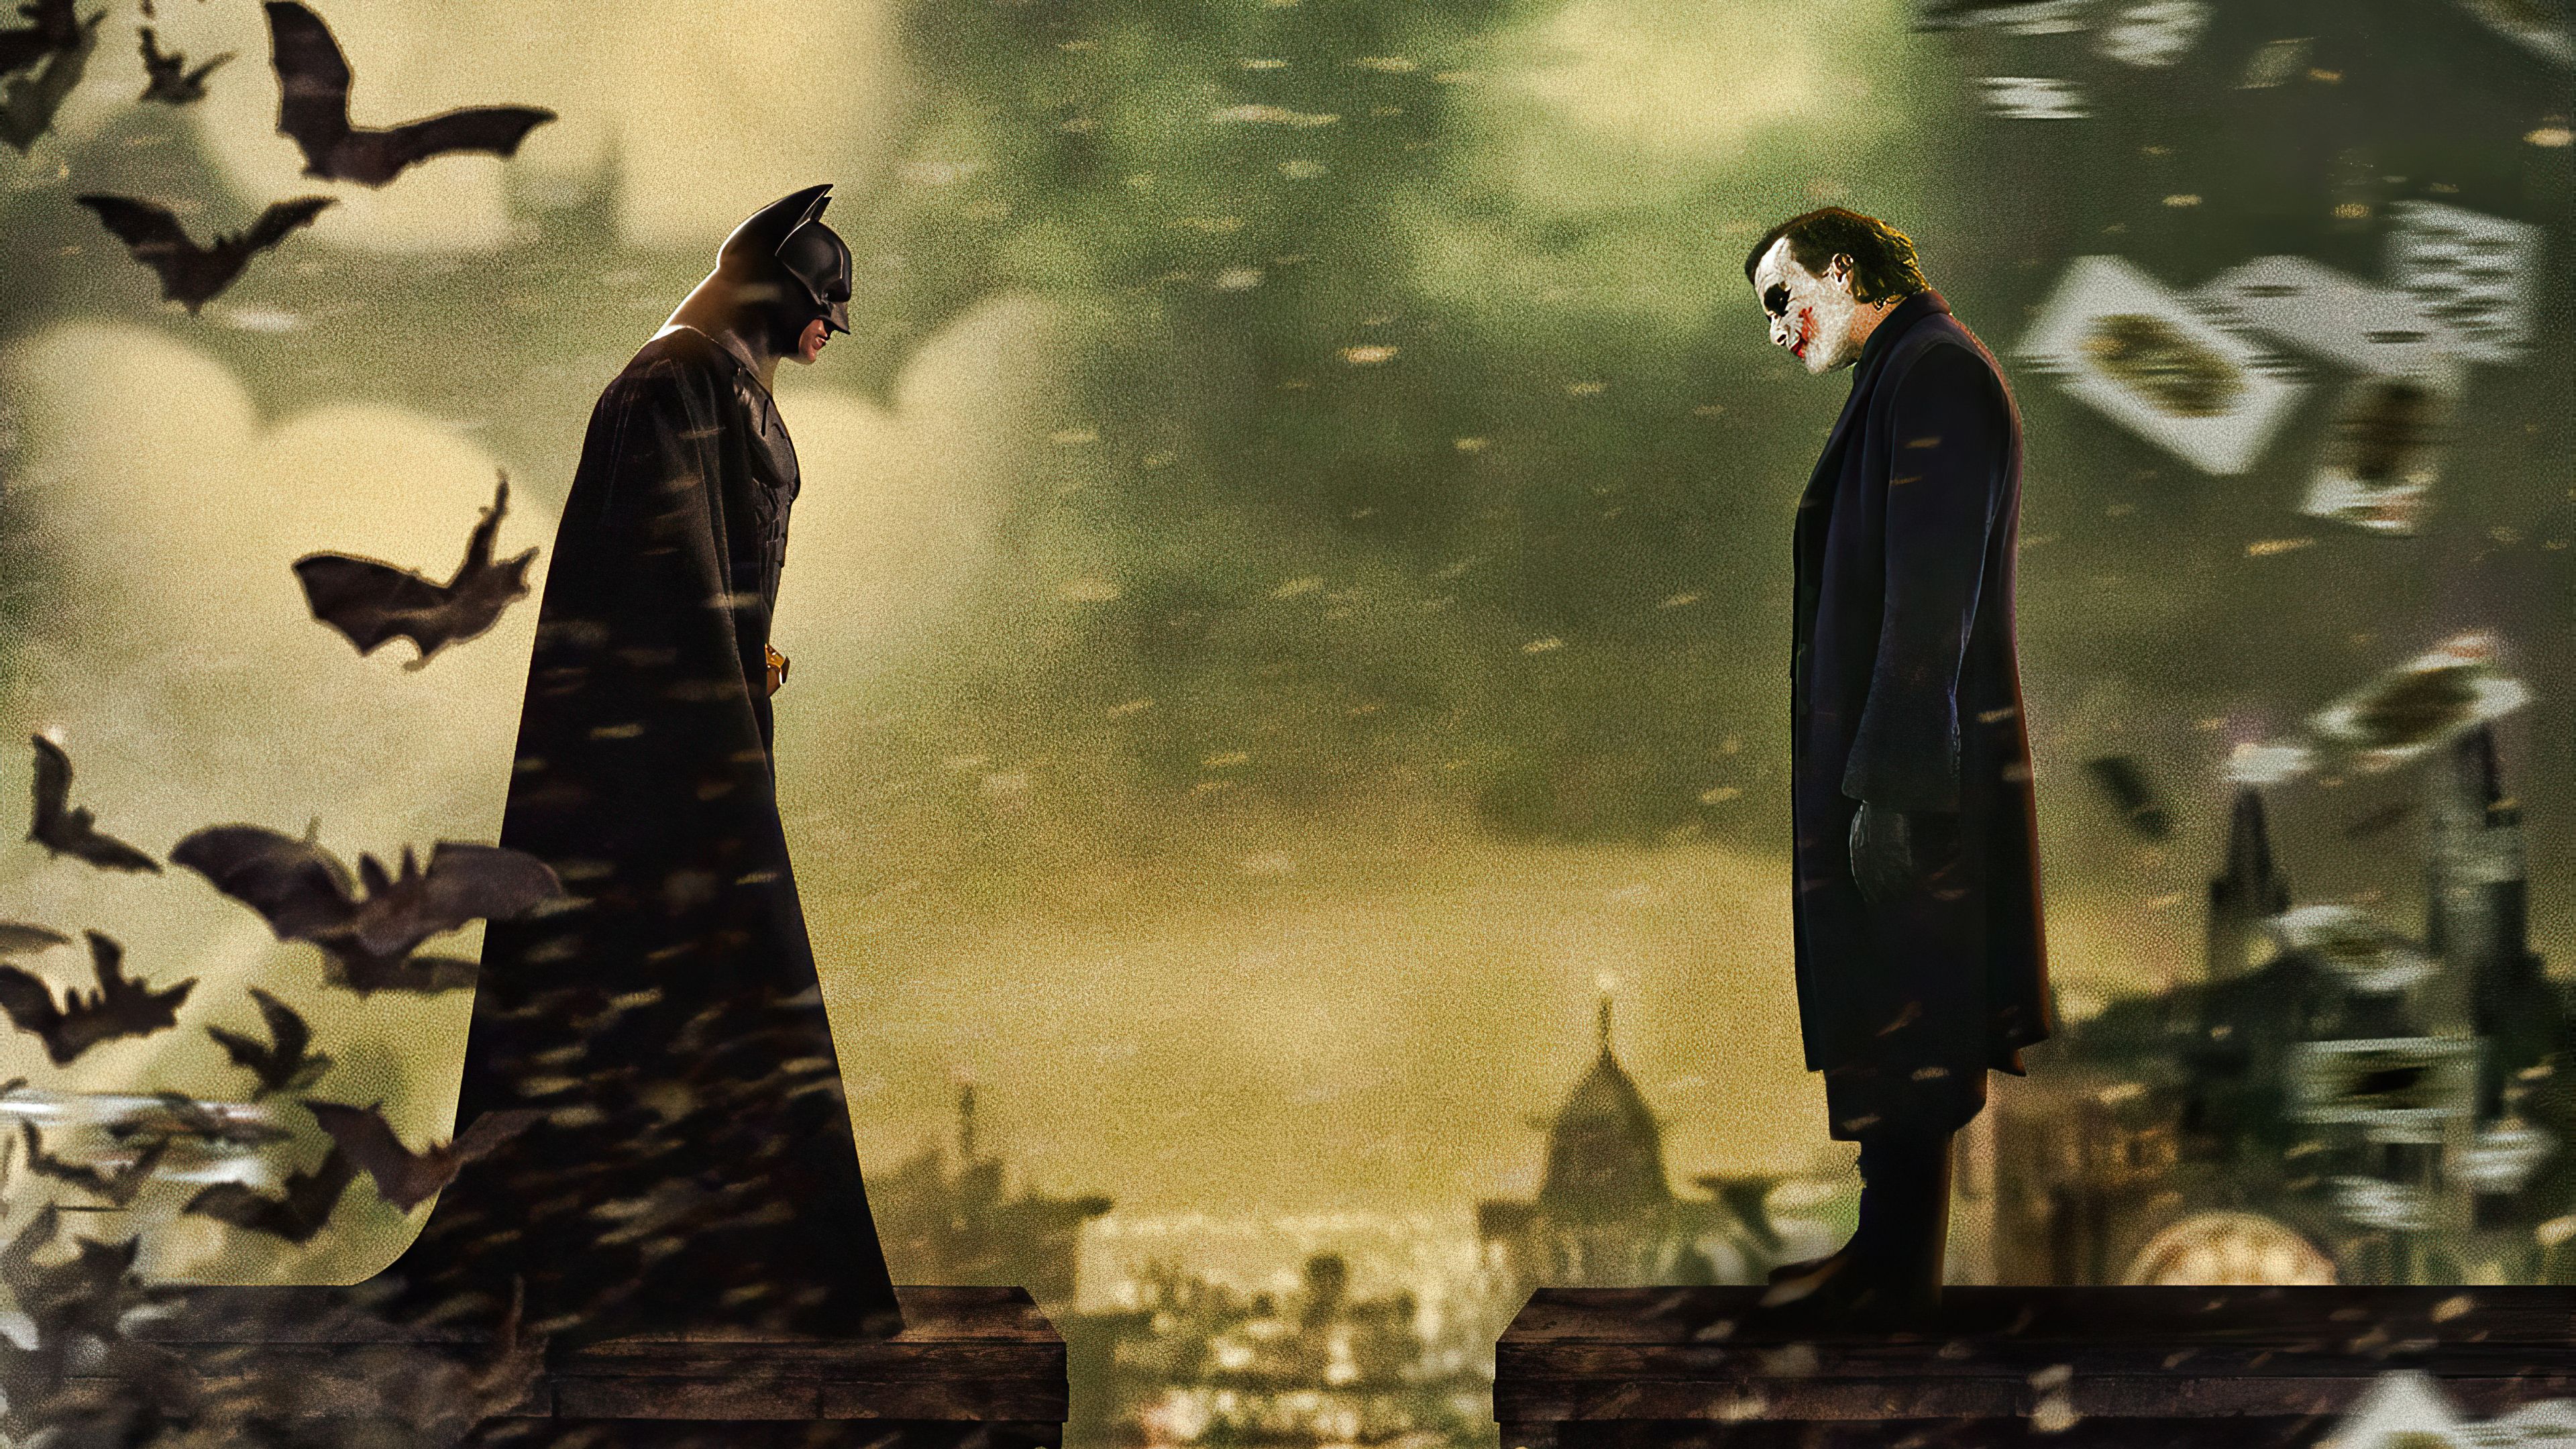 Batman Joker 4k HD Superheroes, 4k Wallpaper, Image, Background, Photo and Picture